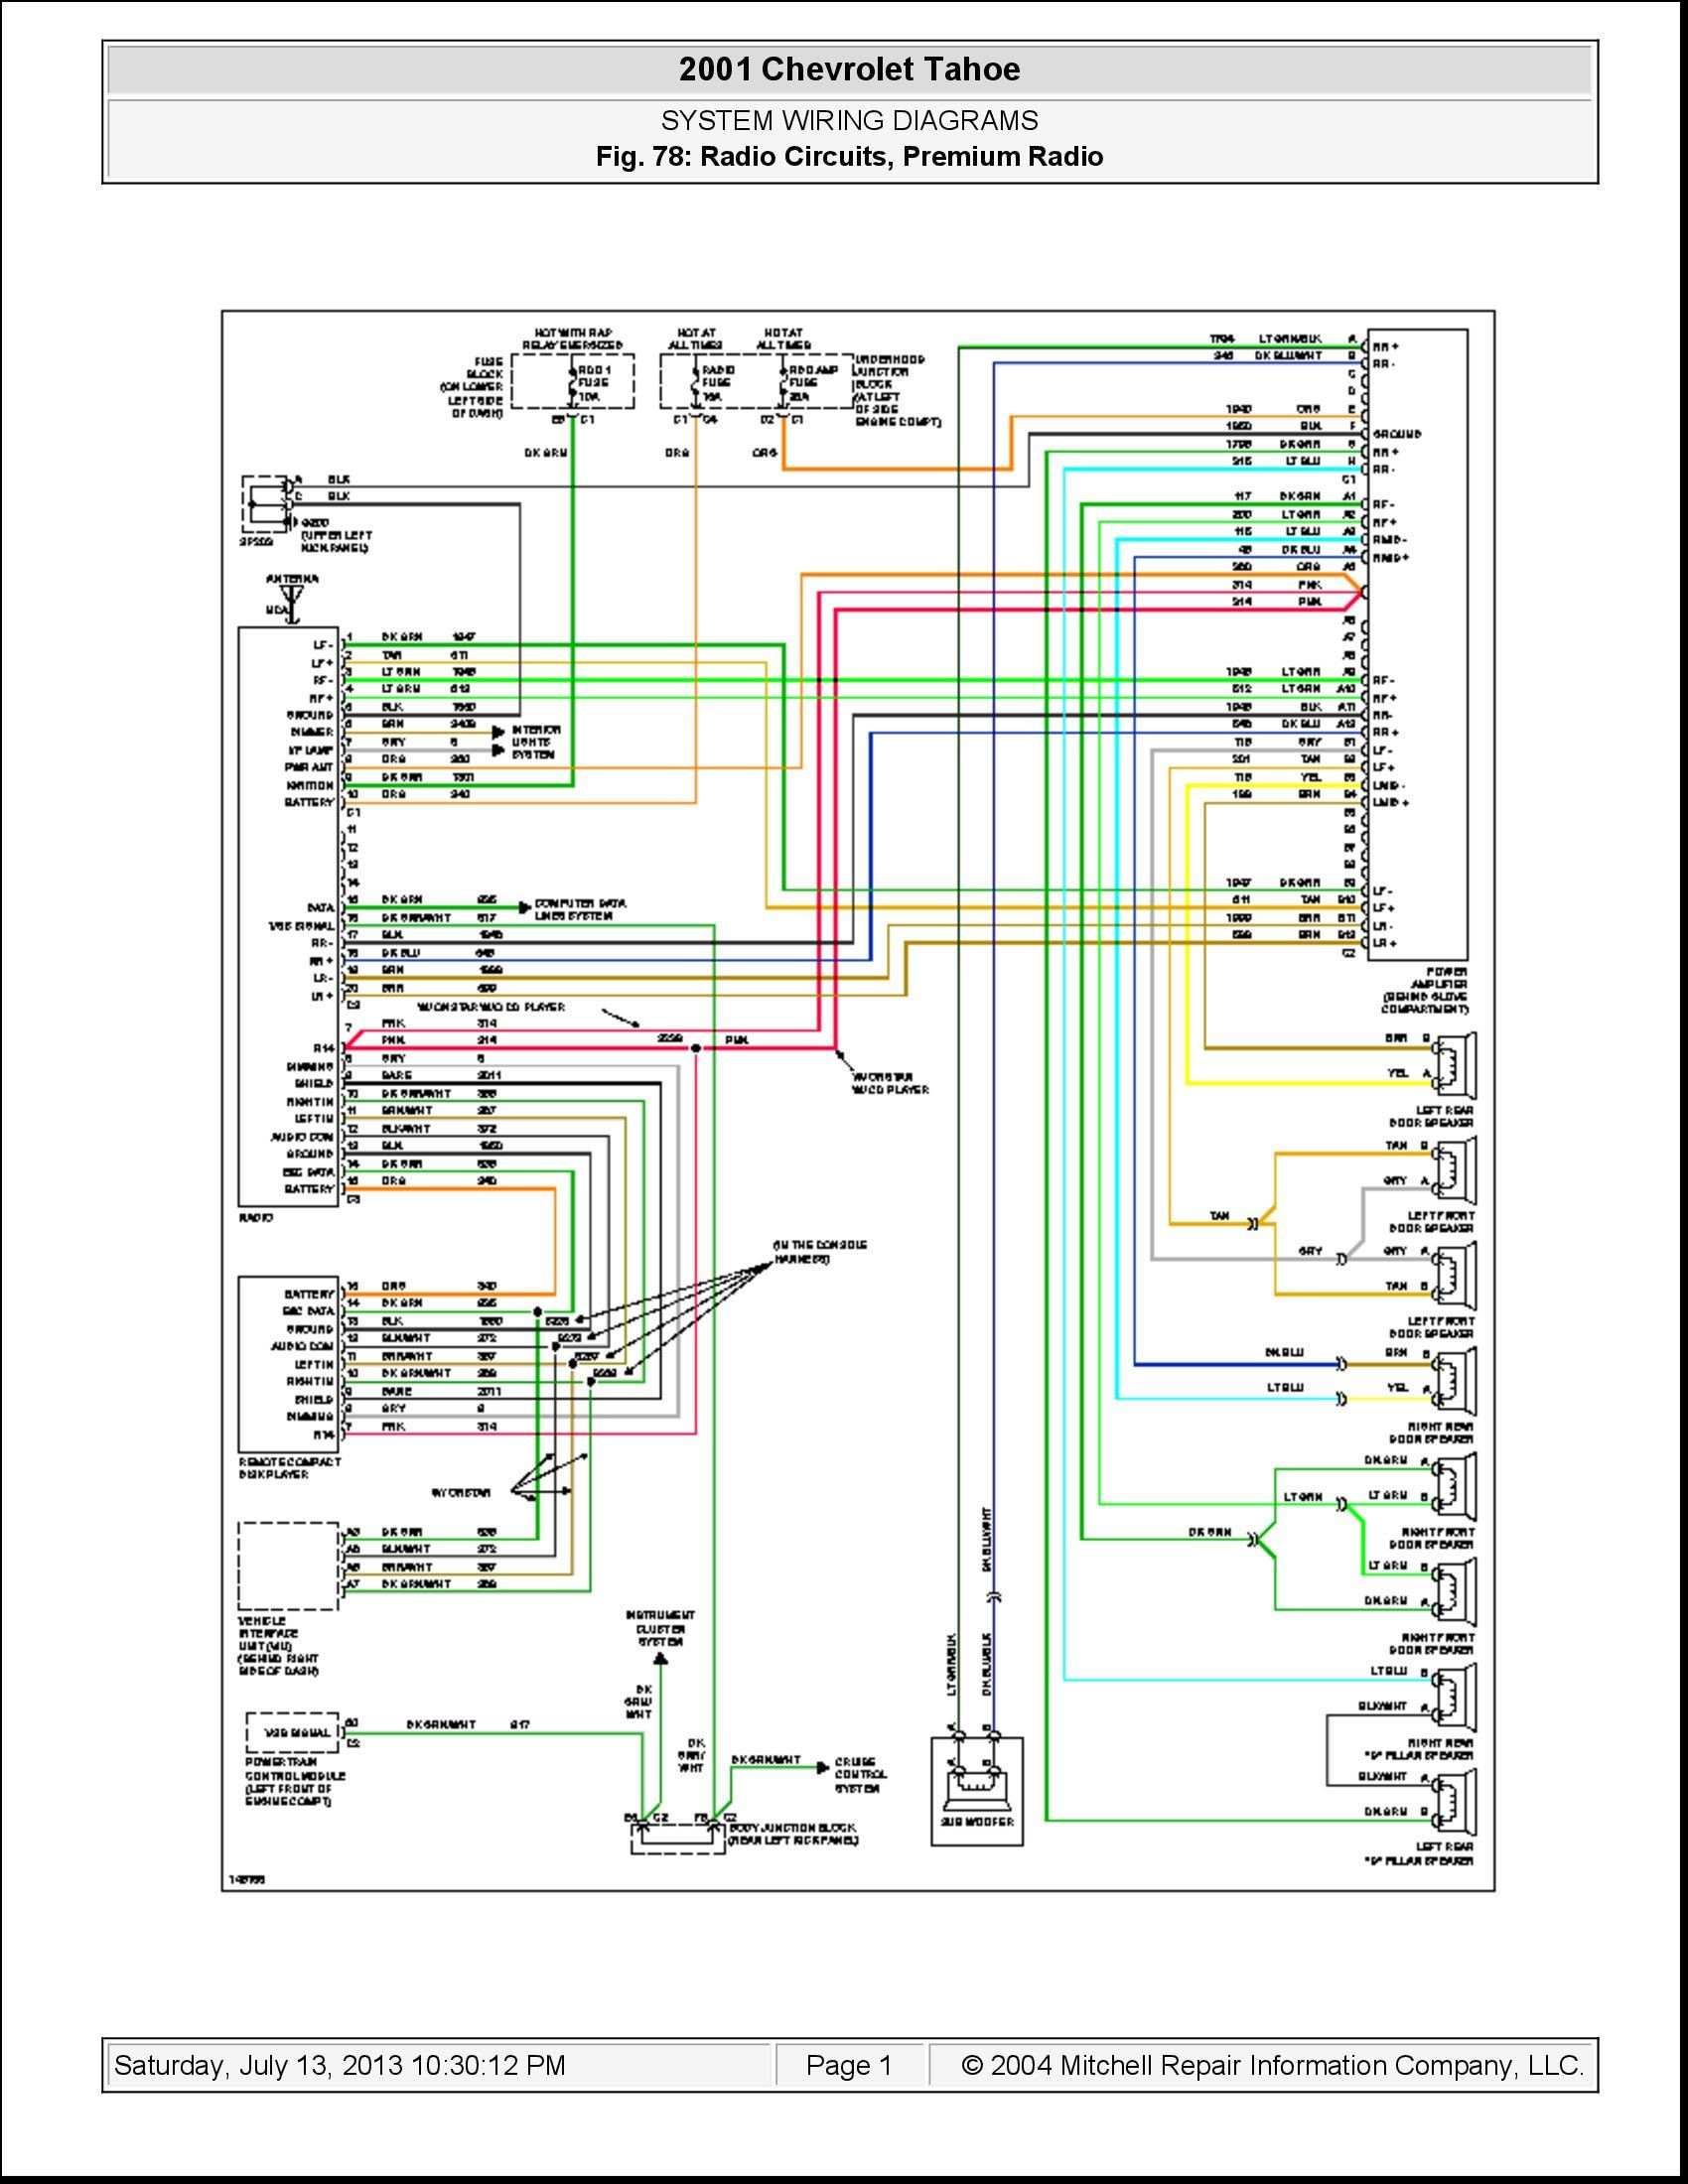 50 inspirational 2001 chevy radio wiring diagram